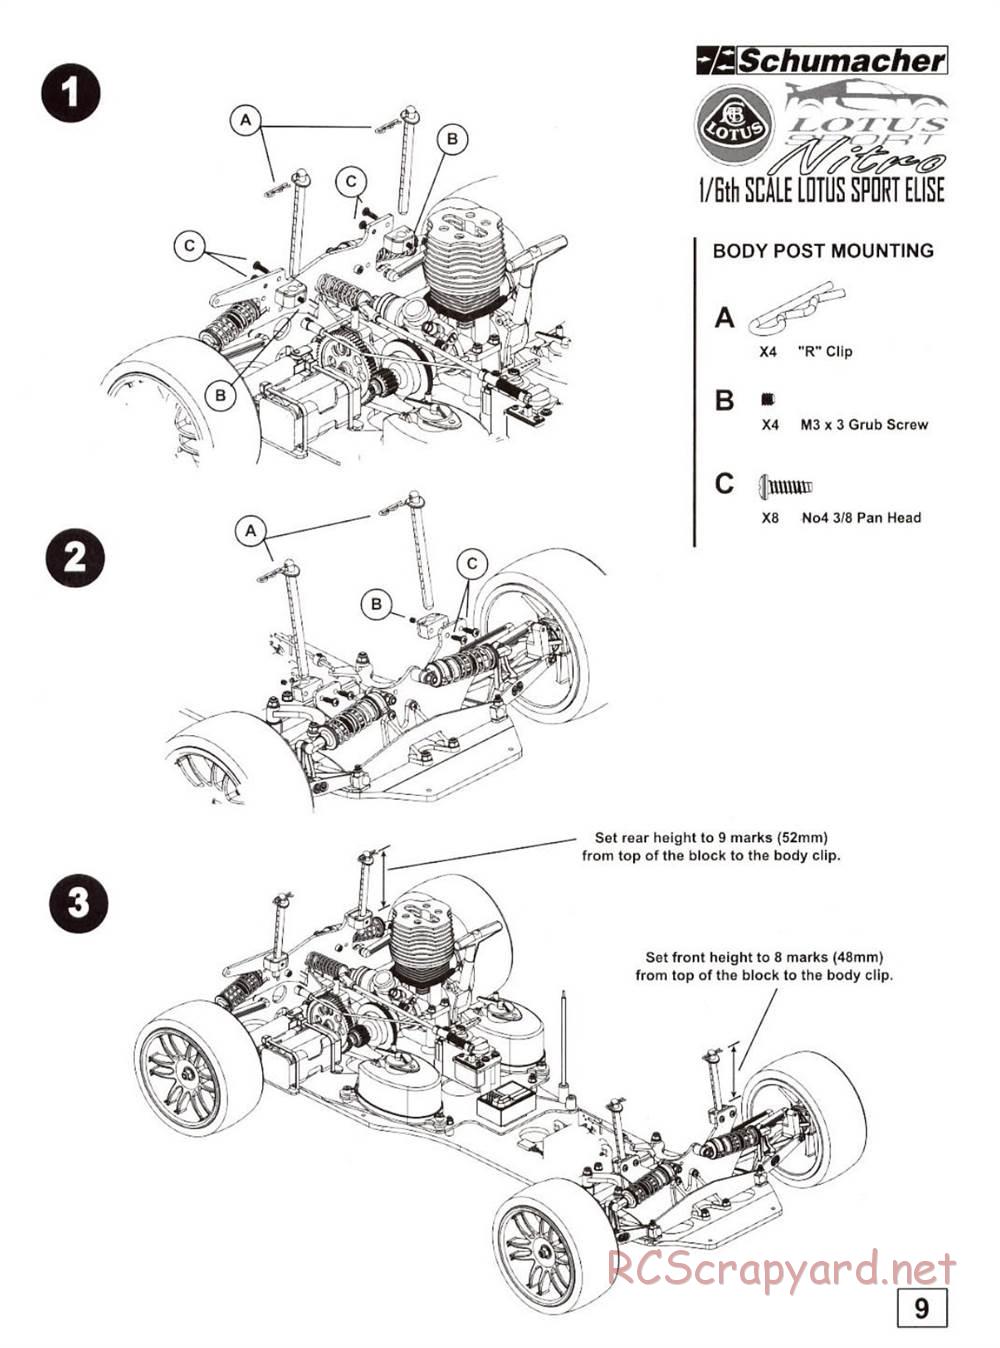 Schumacher - Big 6 Lotus Nitro - Manual - Page 26